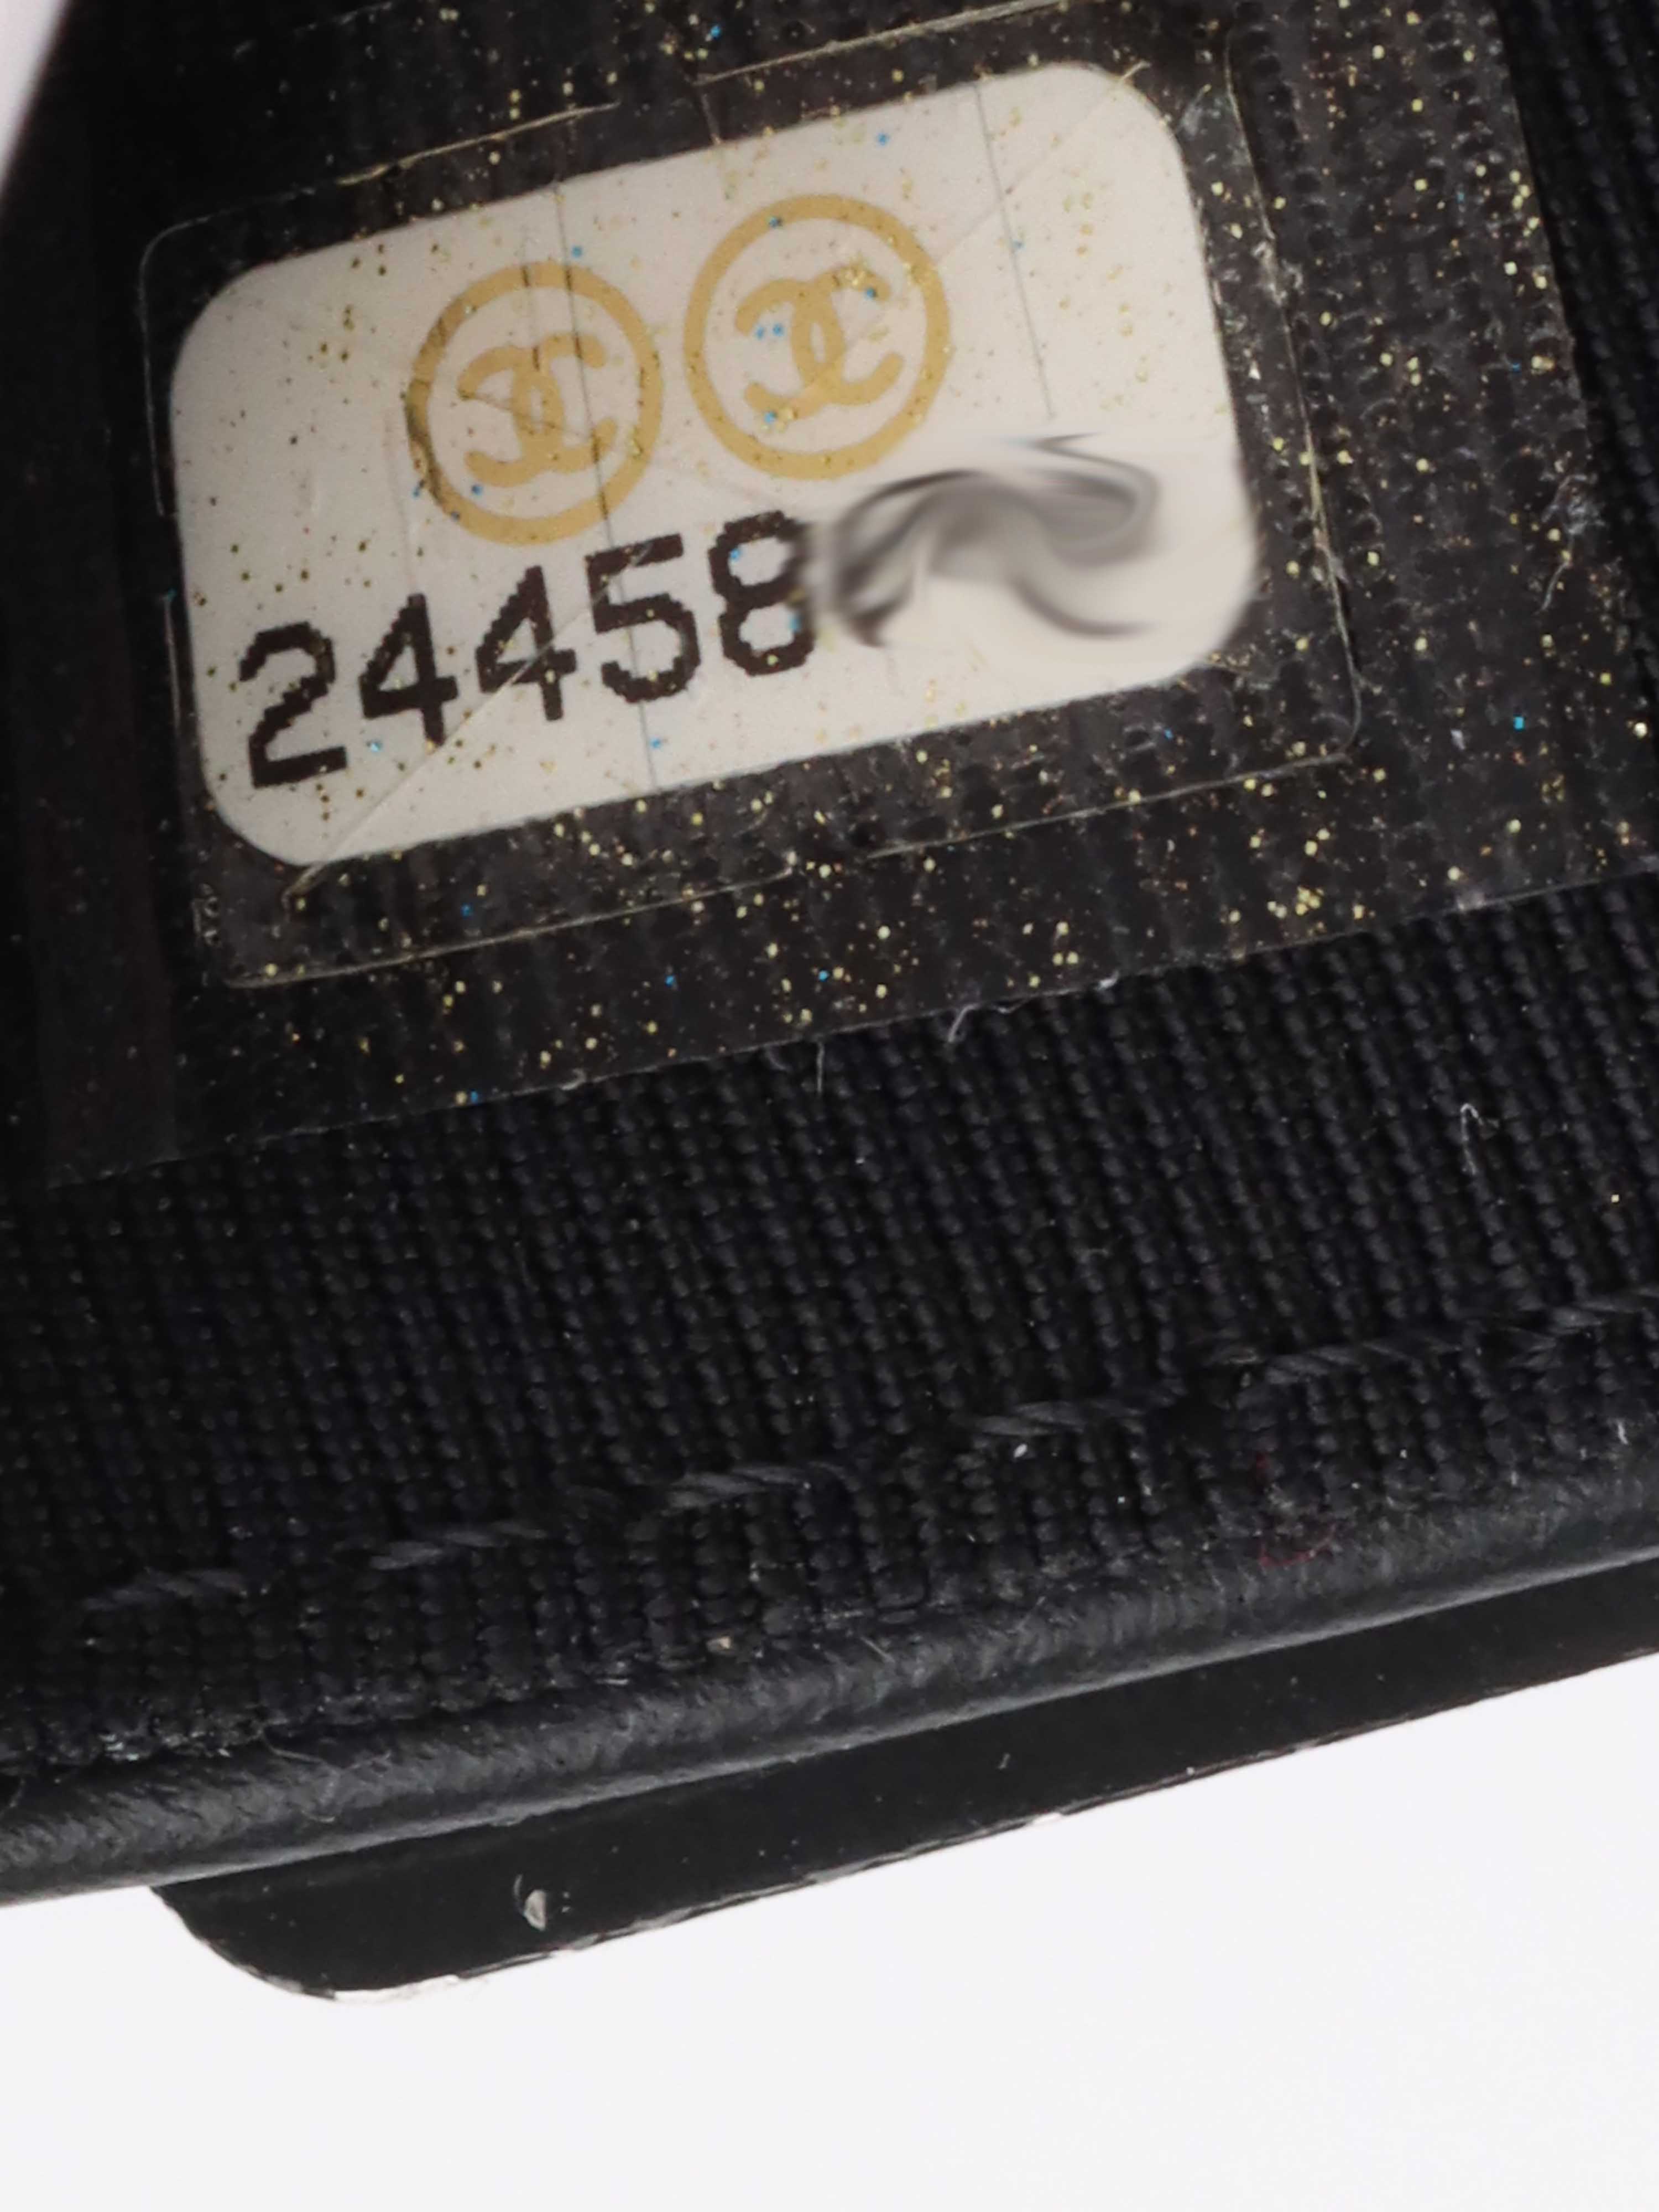 Chanel All Black Chevron 2.55 Compact Wallet.